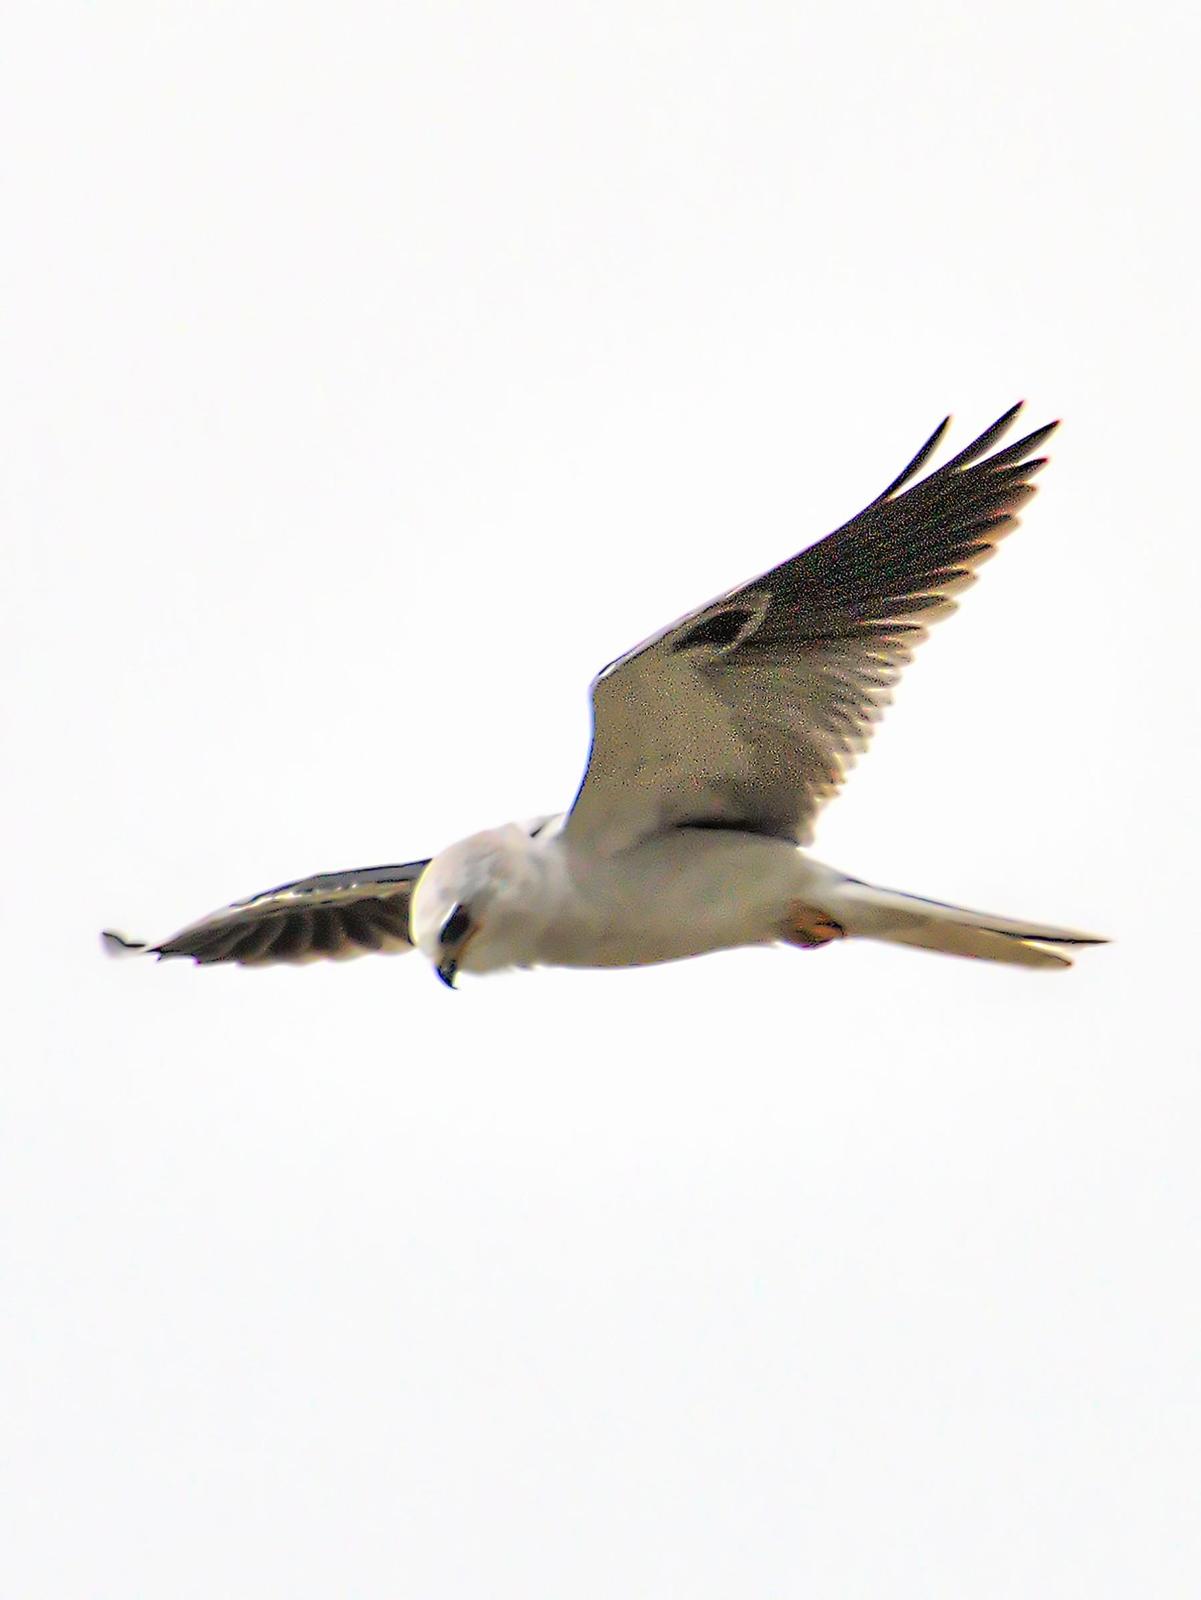 White-tailed Kite Photo by Dan Tallman